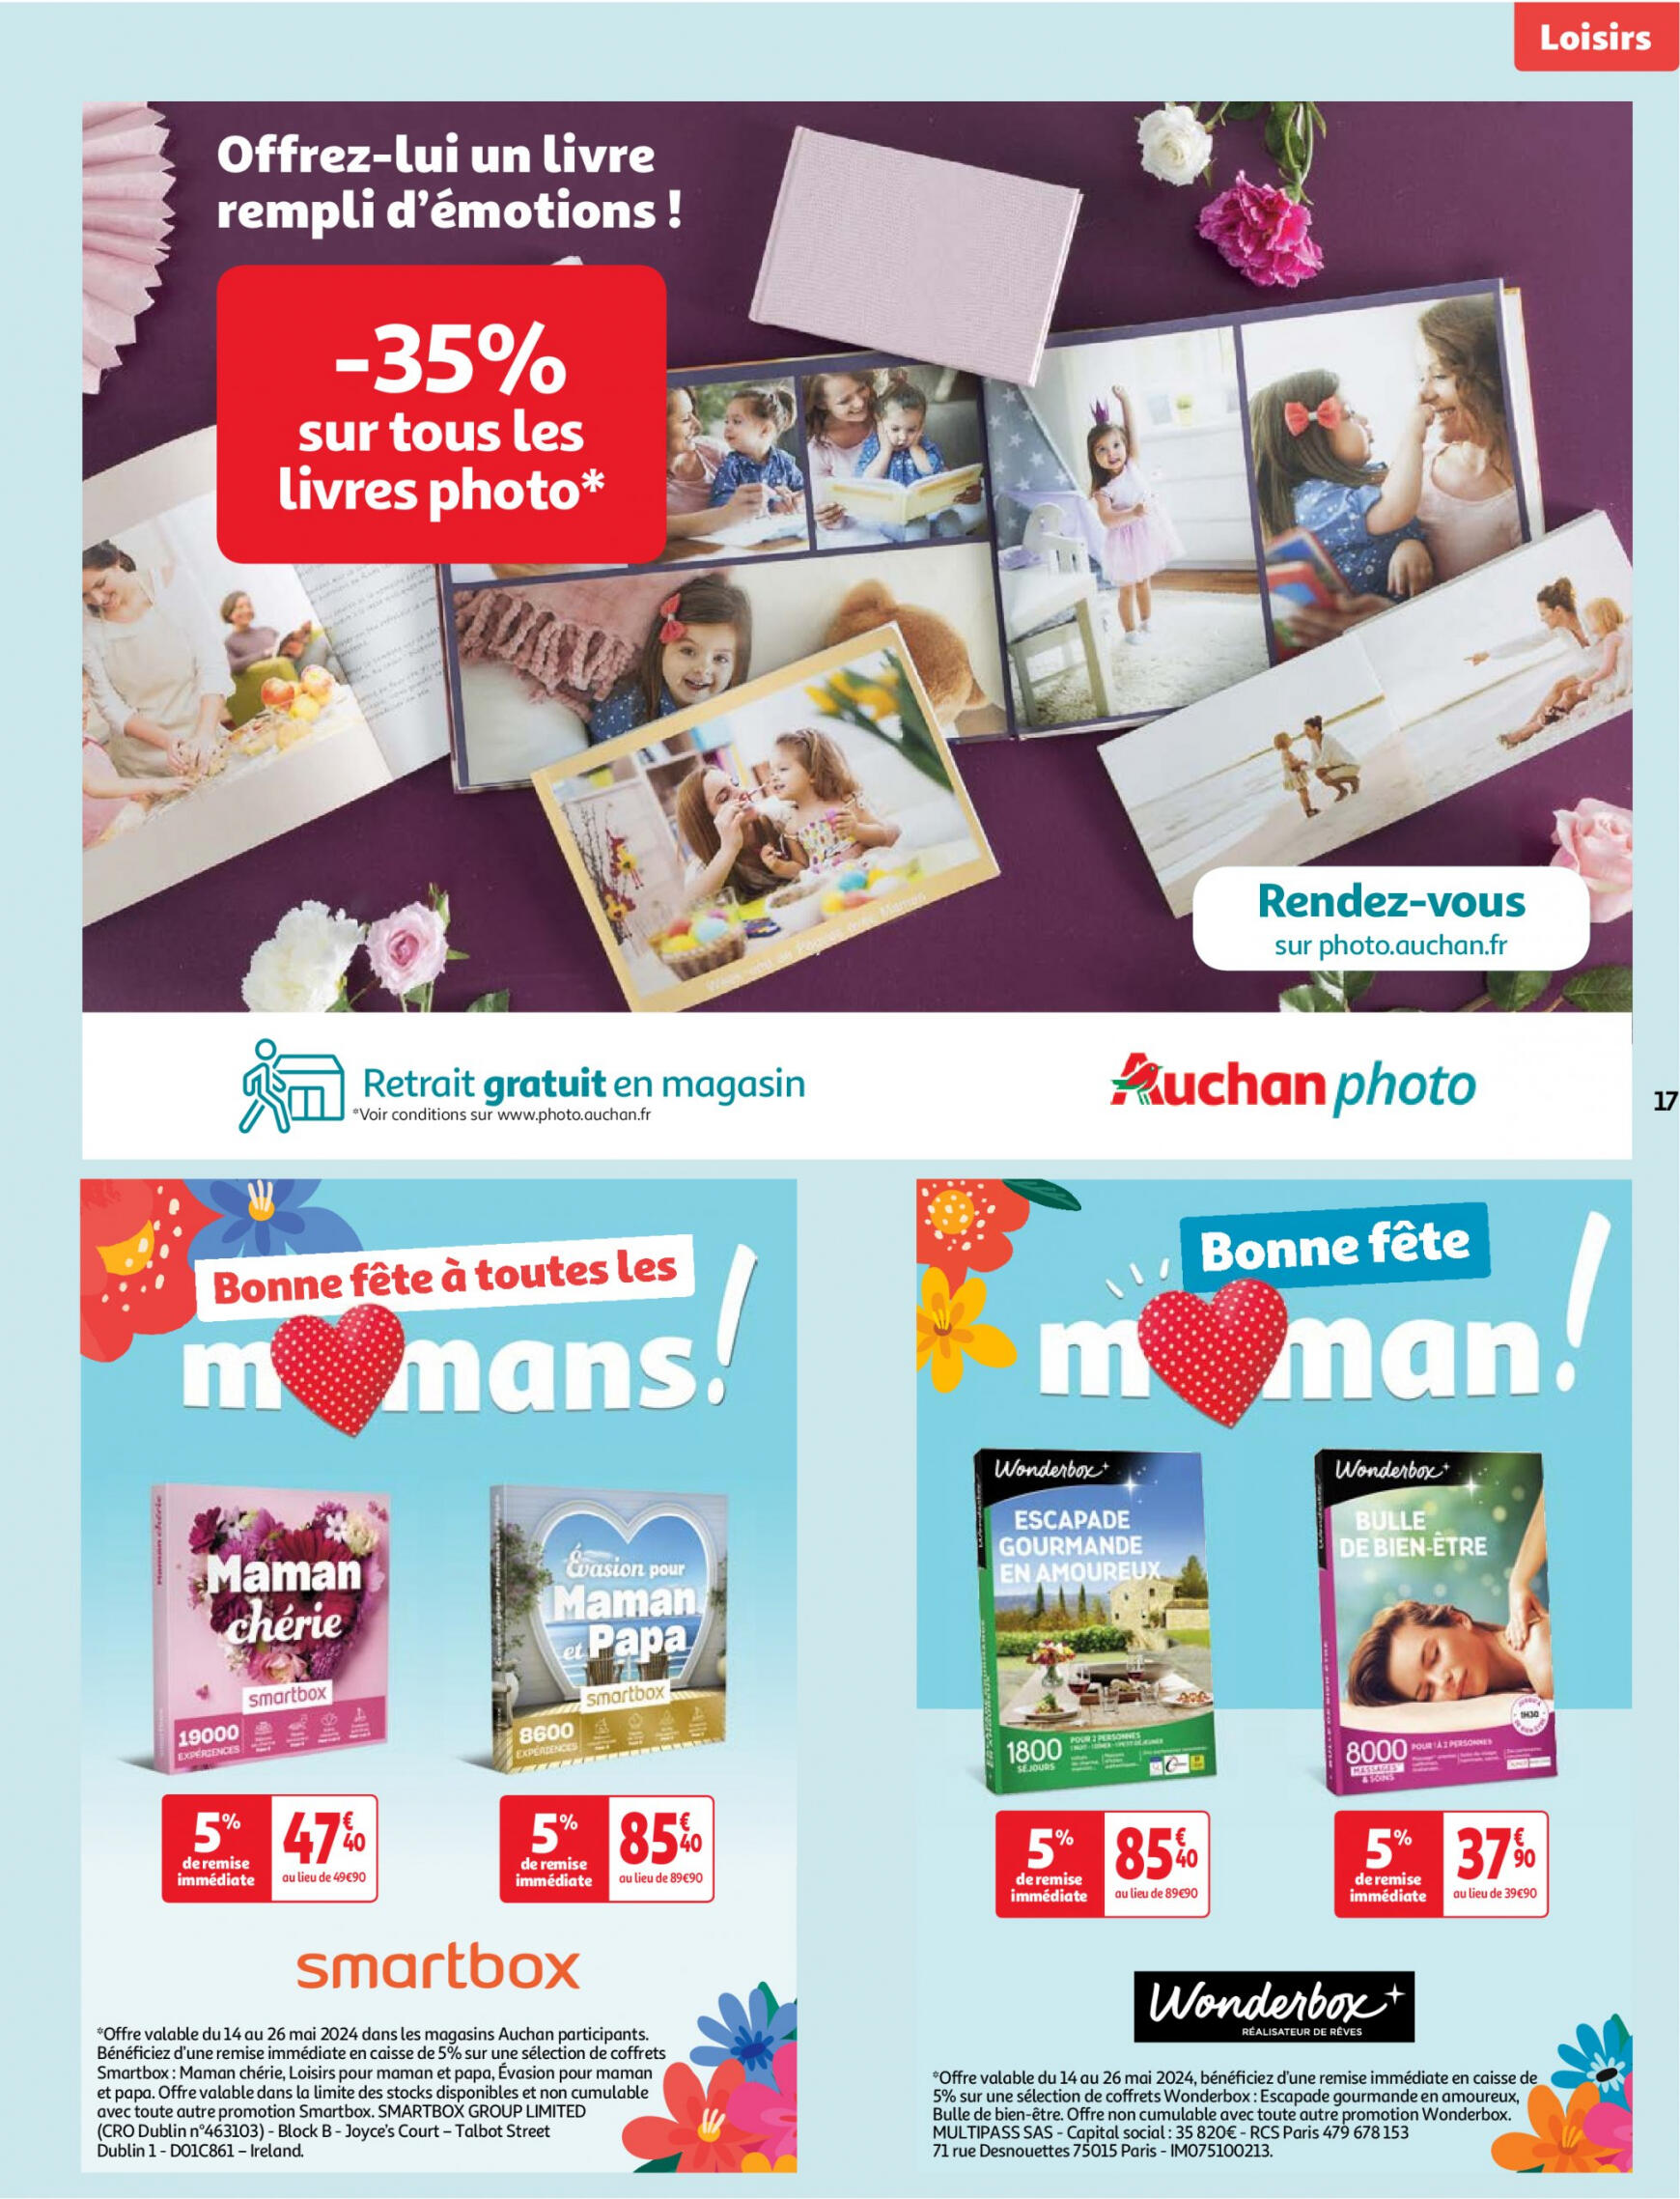 auchan - Auchan - Merci maman folder huidig 14.05. - 26.05. - page: 17